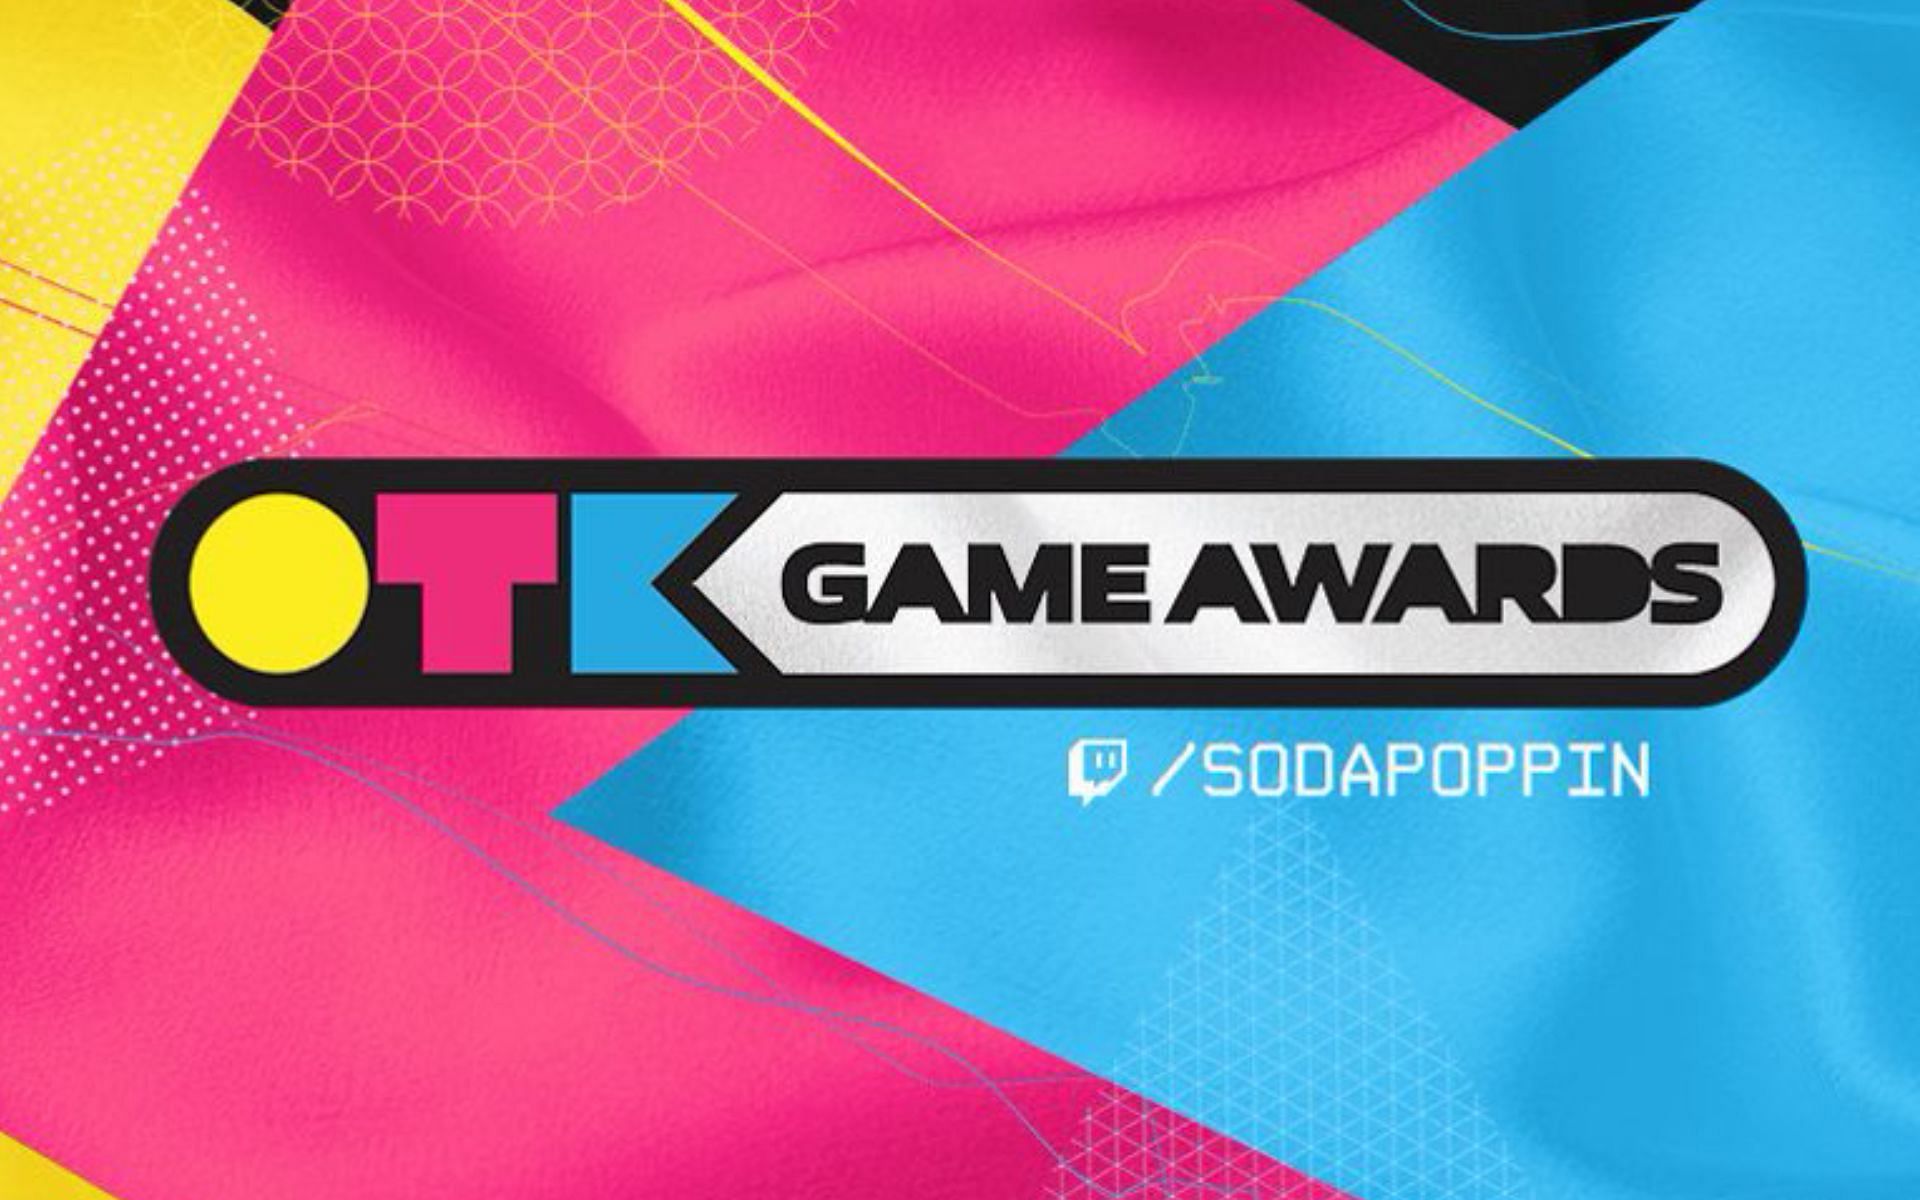 Everything you need to know about OTK Games Awards (Image via OTKGameAwards/X)